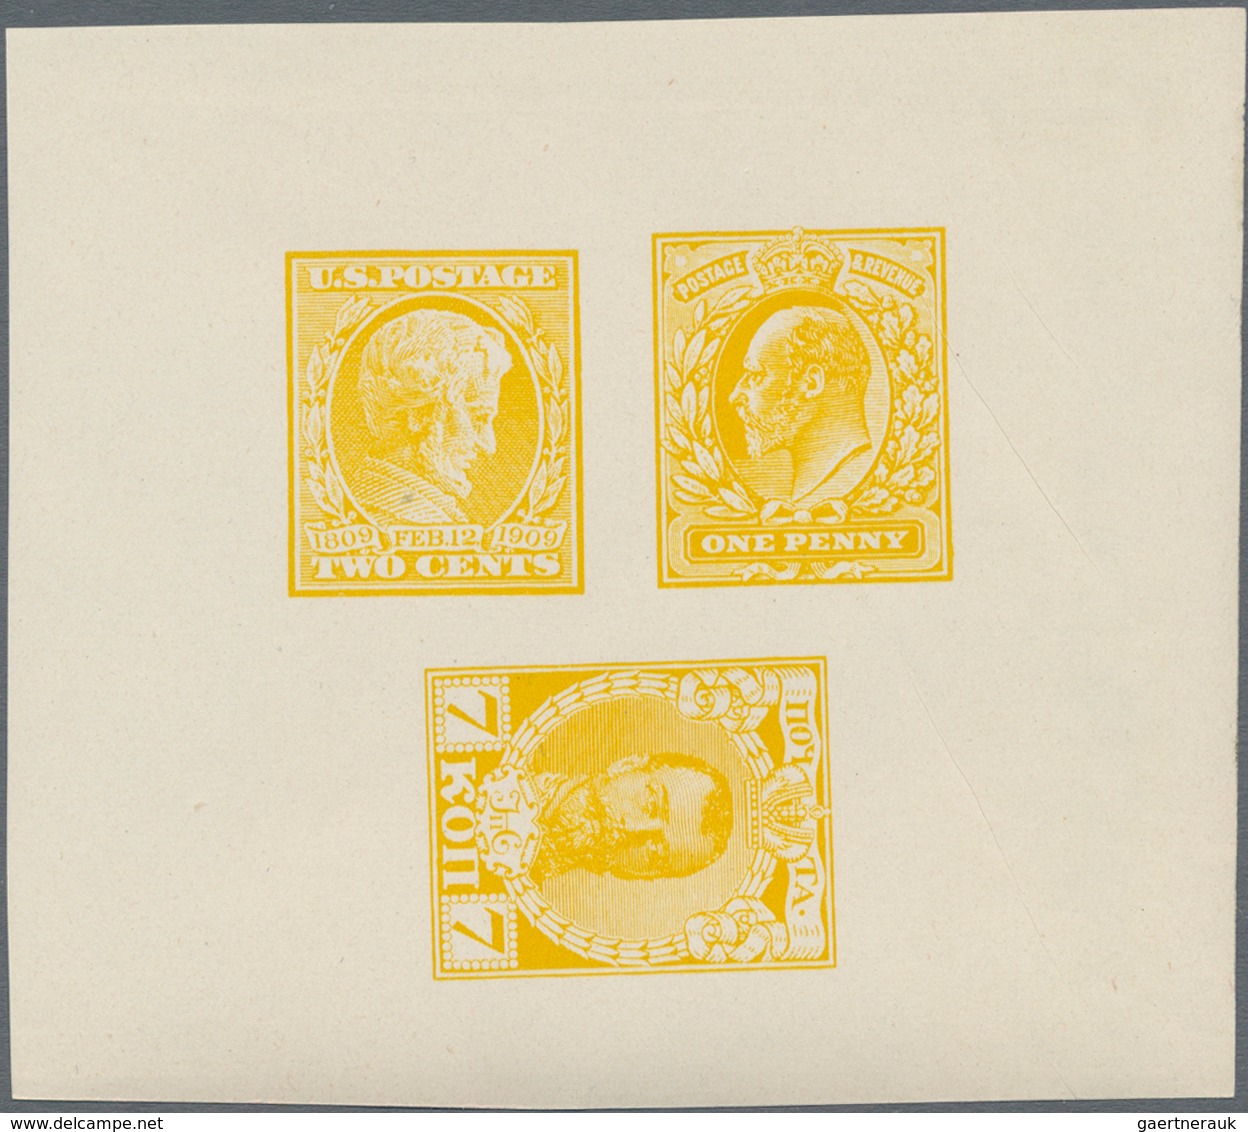 Alle Welt: 1930 (appr.), So Called "Eckerliin Essays" For Stamps Of Great Briatin, USA And Russia, D - Sammlungen (ohne Album)